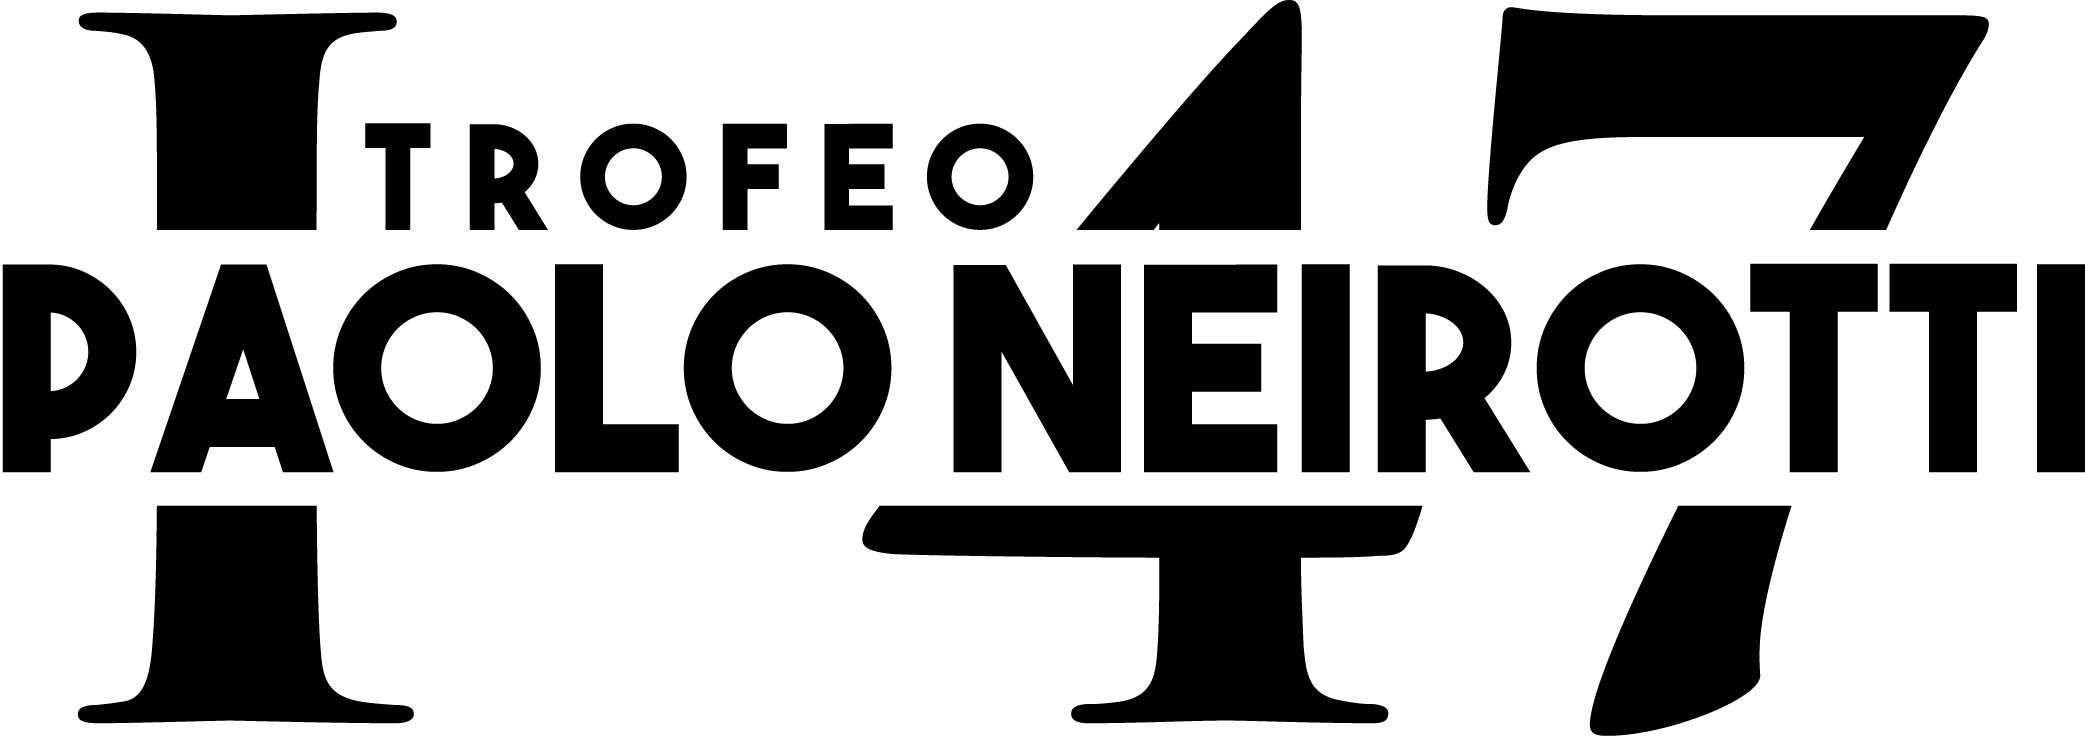 neirotti logo